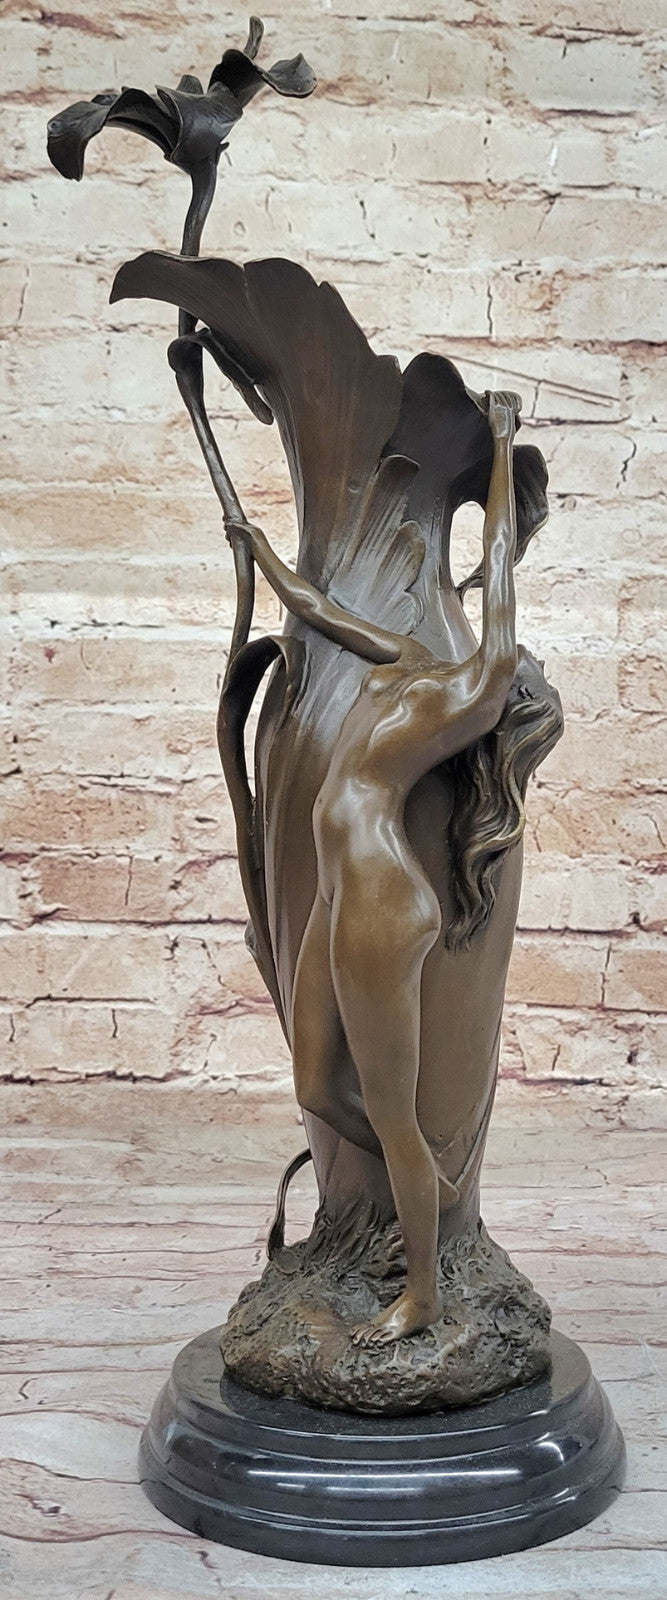 Artisan Craftsmanship: Nude Girl with Flower Vase - Charles Louchet`s Bronze Sculpture